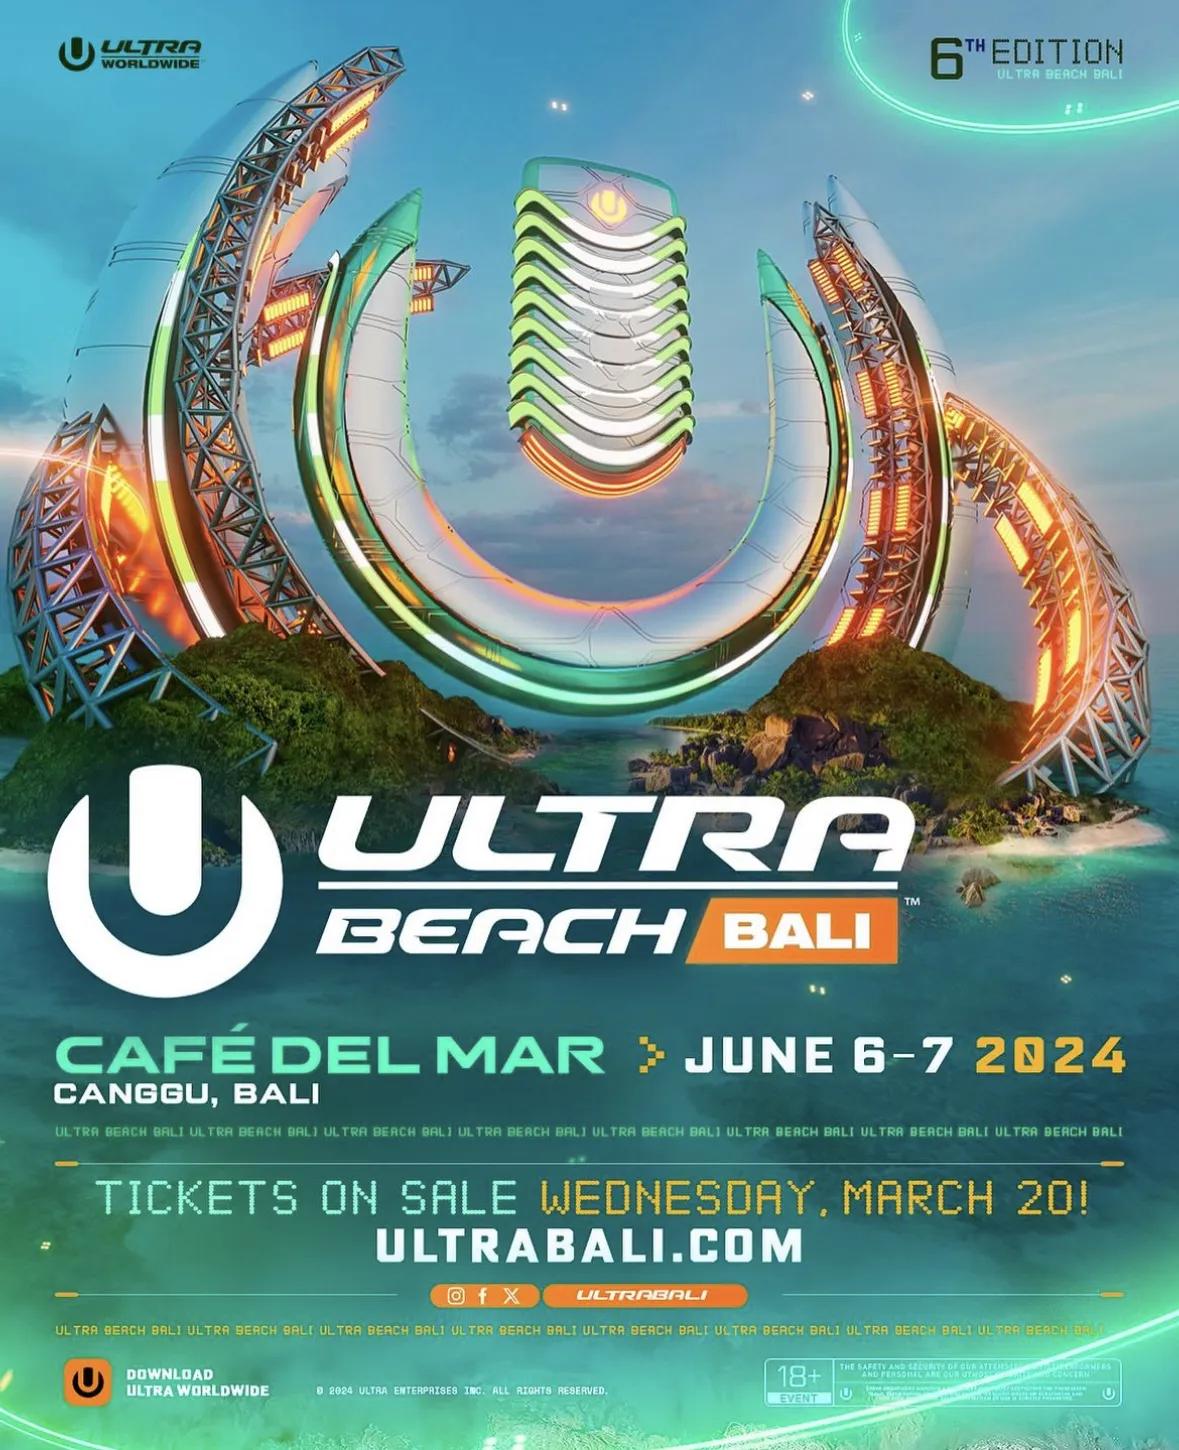 Event at Café del Mar everyday in 2024: Ultra Beach Bali